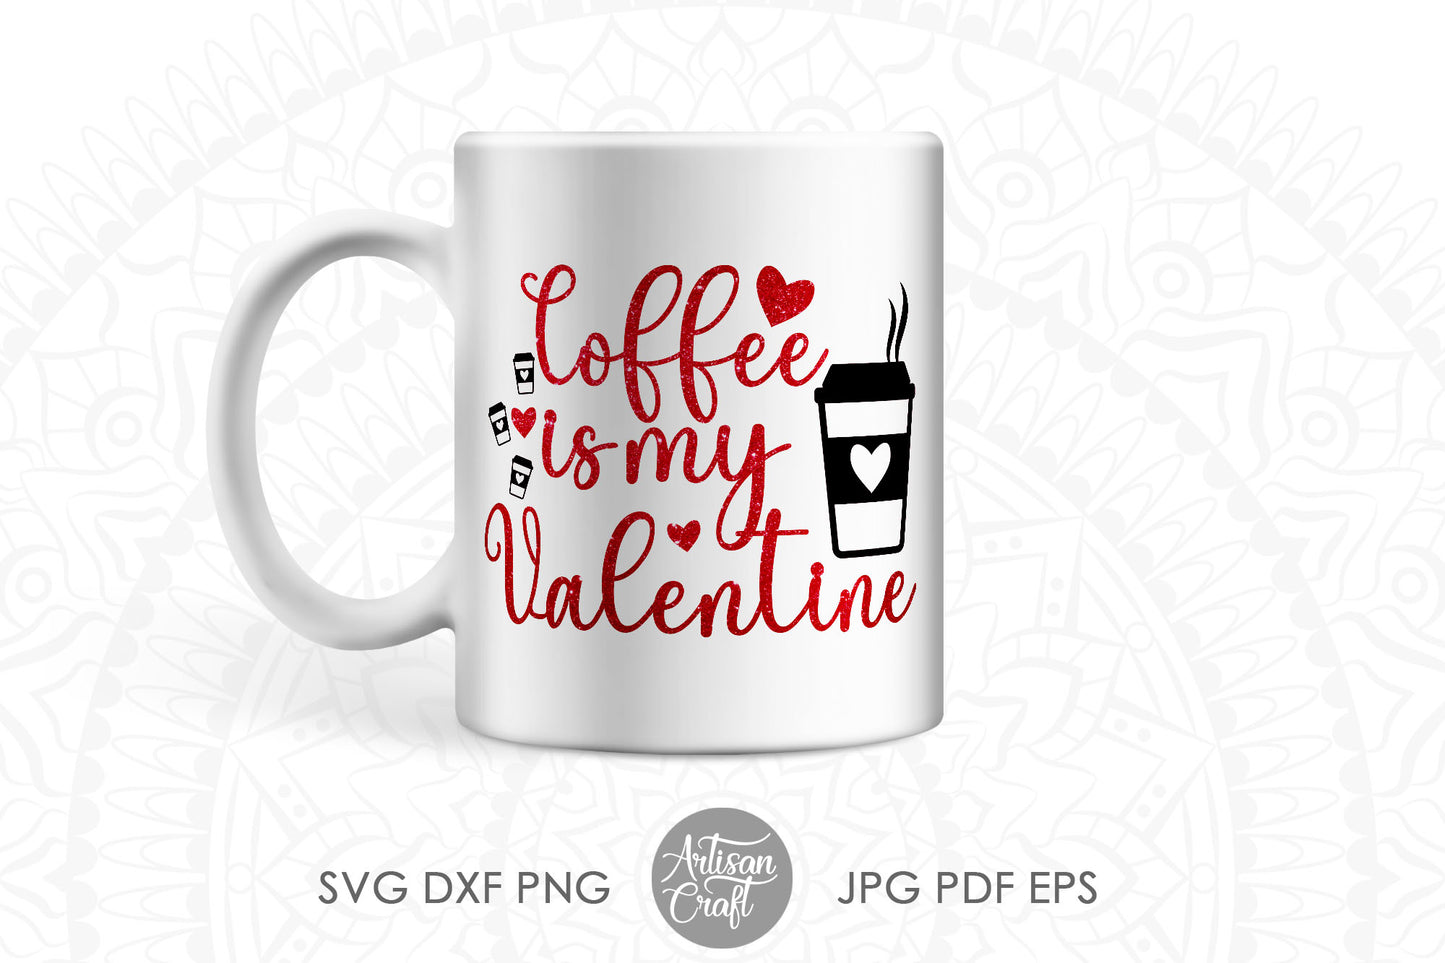 Coffee is my Valentine SVG | Tea is my Valentine